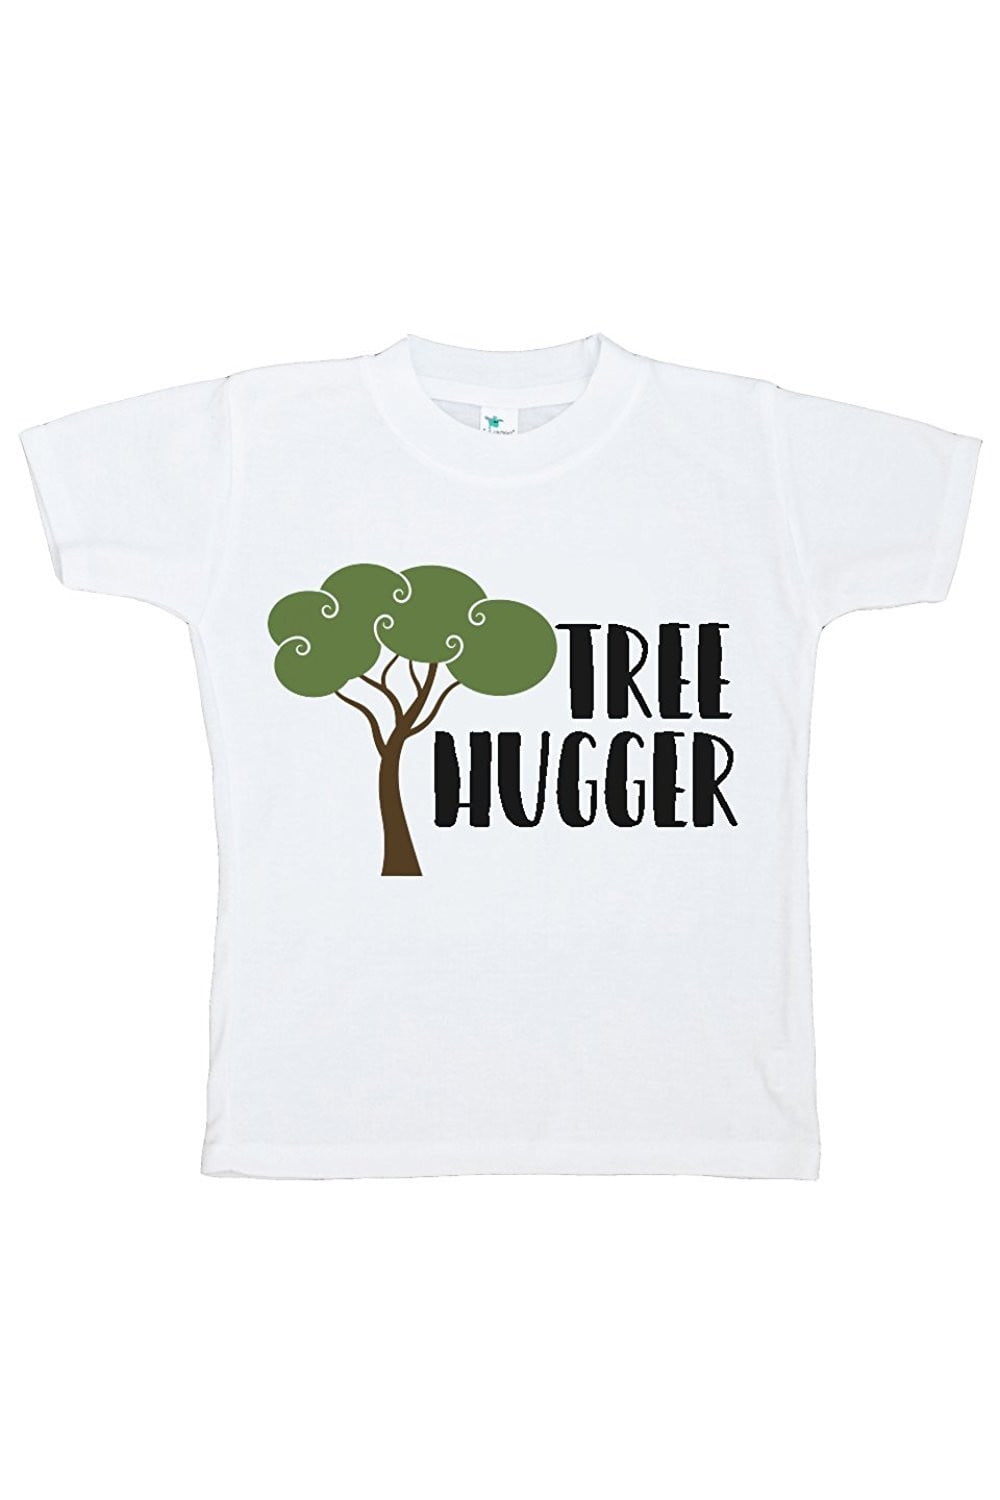 hvis du kan niece Uskyld Custom Party Shop Kids Tree Hugger Outdoors T-shirt - Walmart.com